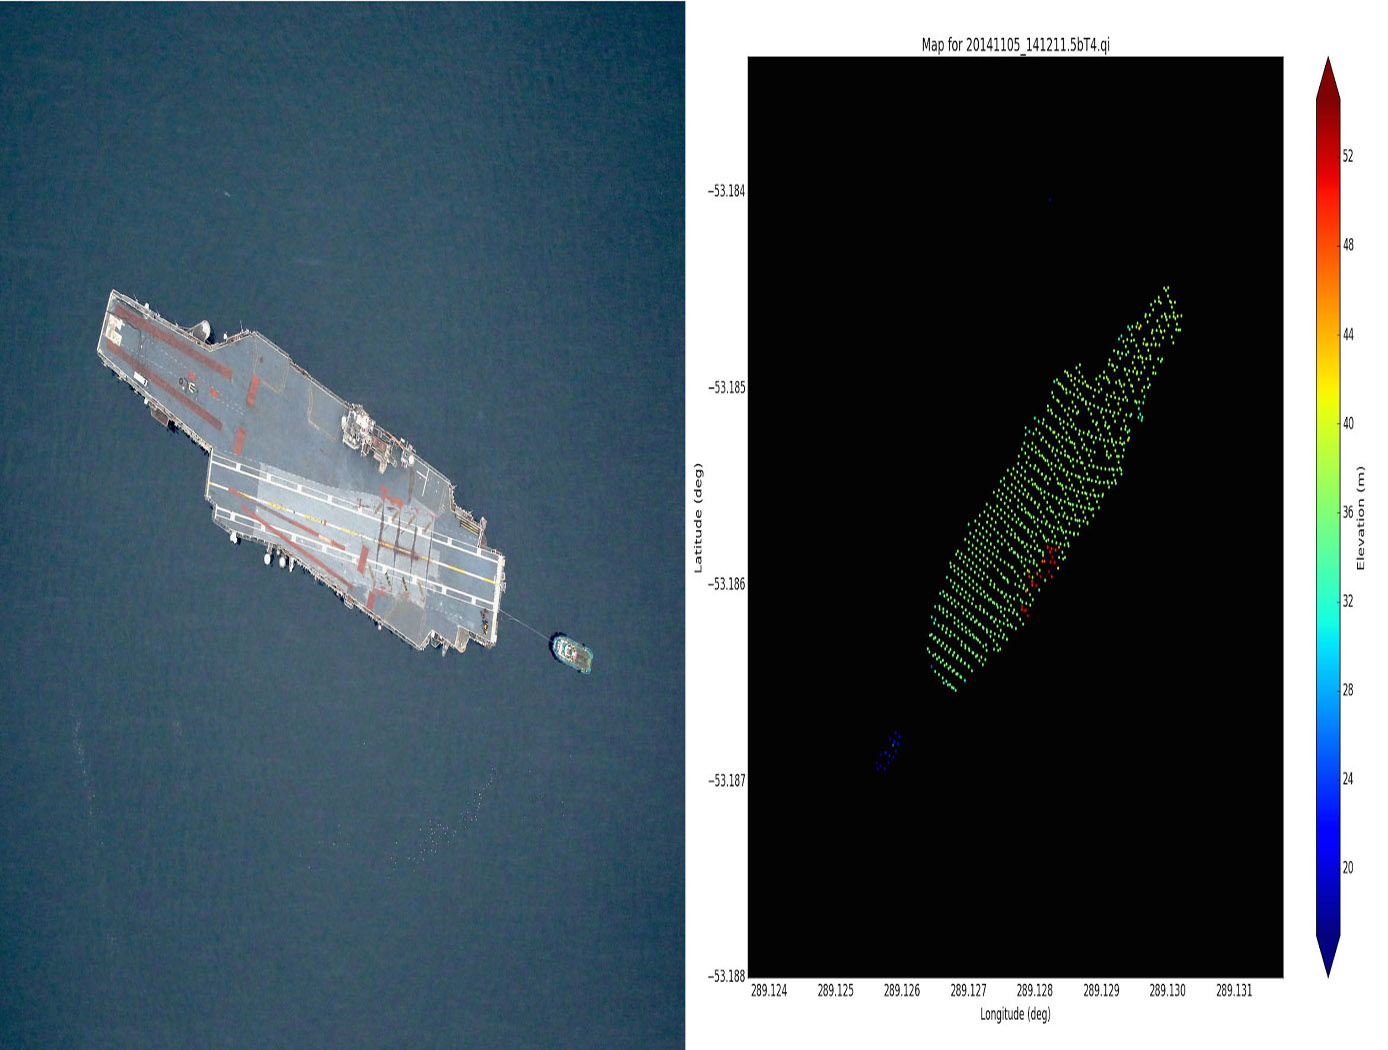 Airborne Topographic Mapper wide scan lidar elevation data taken over the USS Constellation